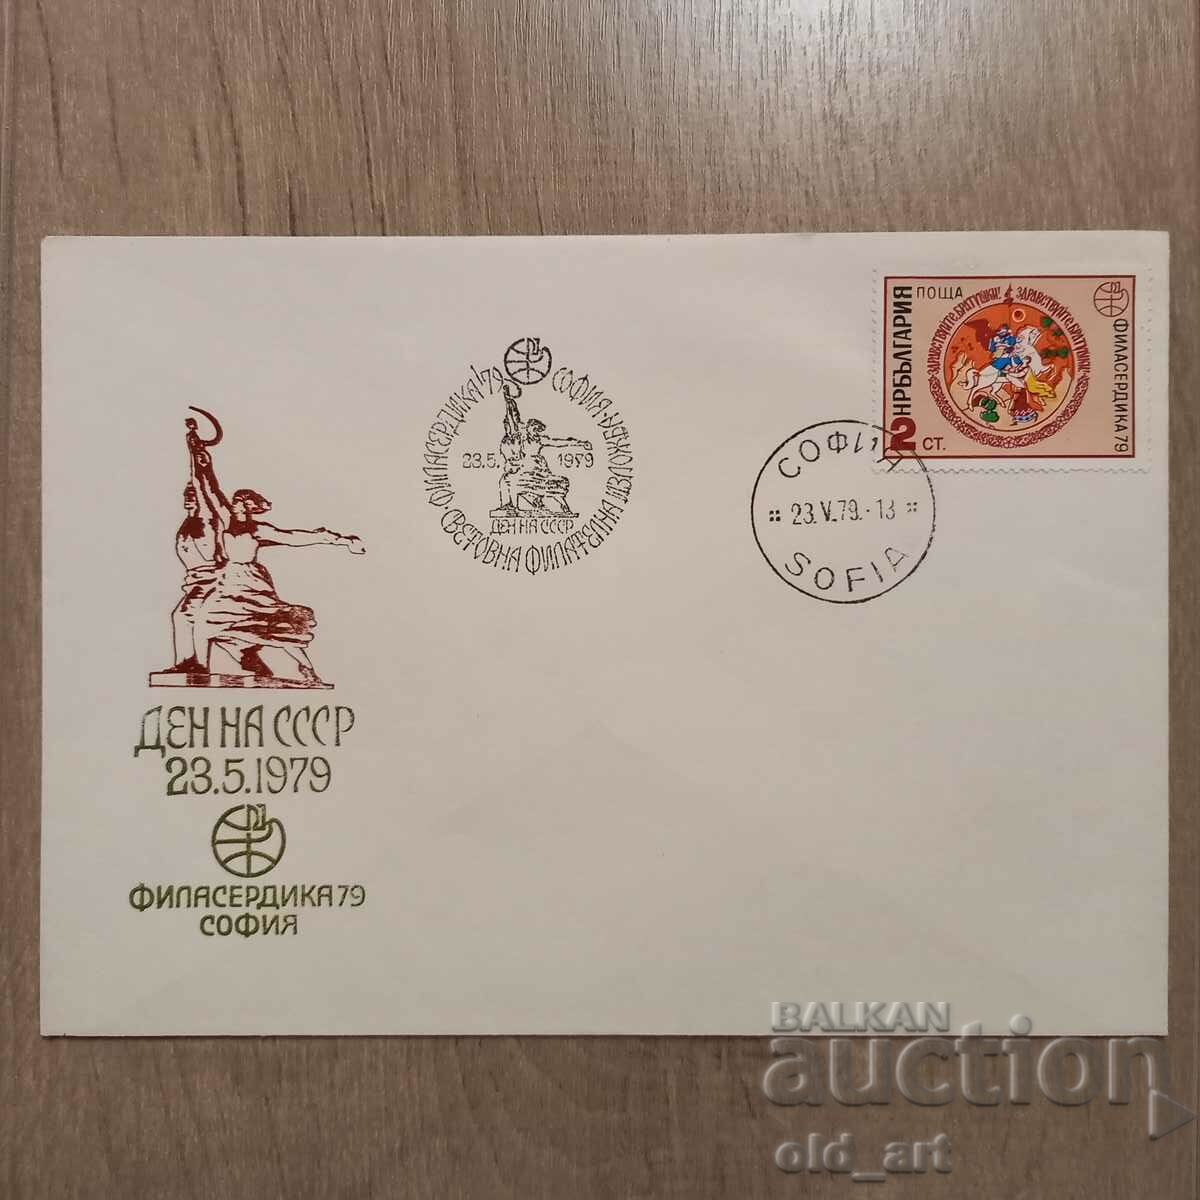 Postal envelope - Philaserdika79-Day of the USSR